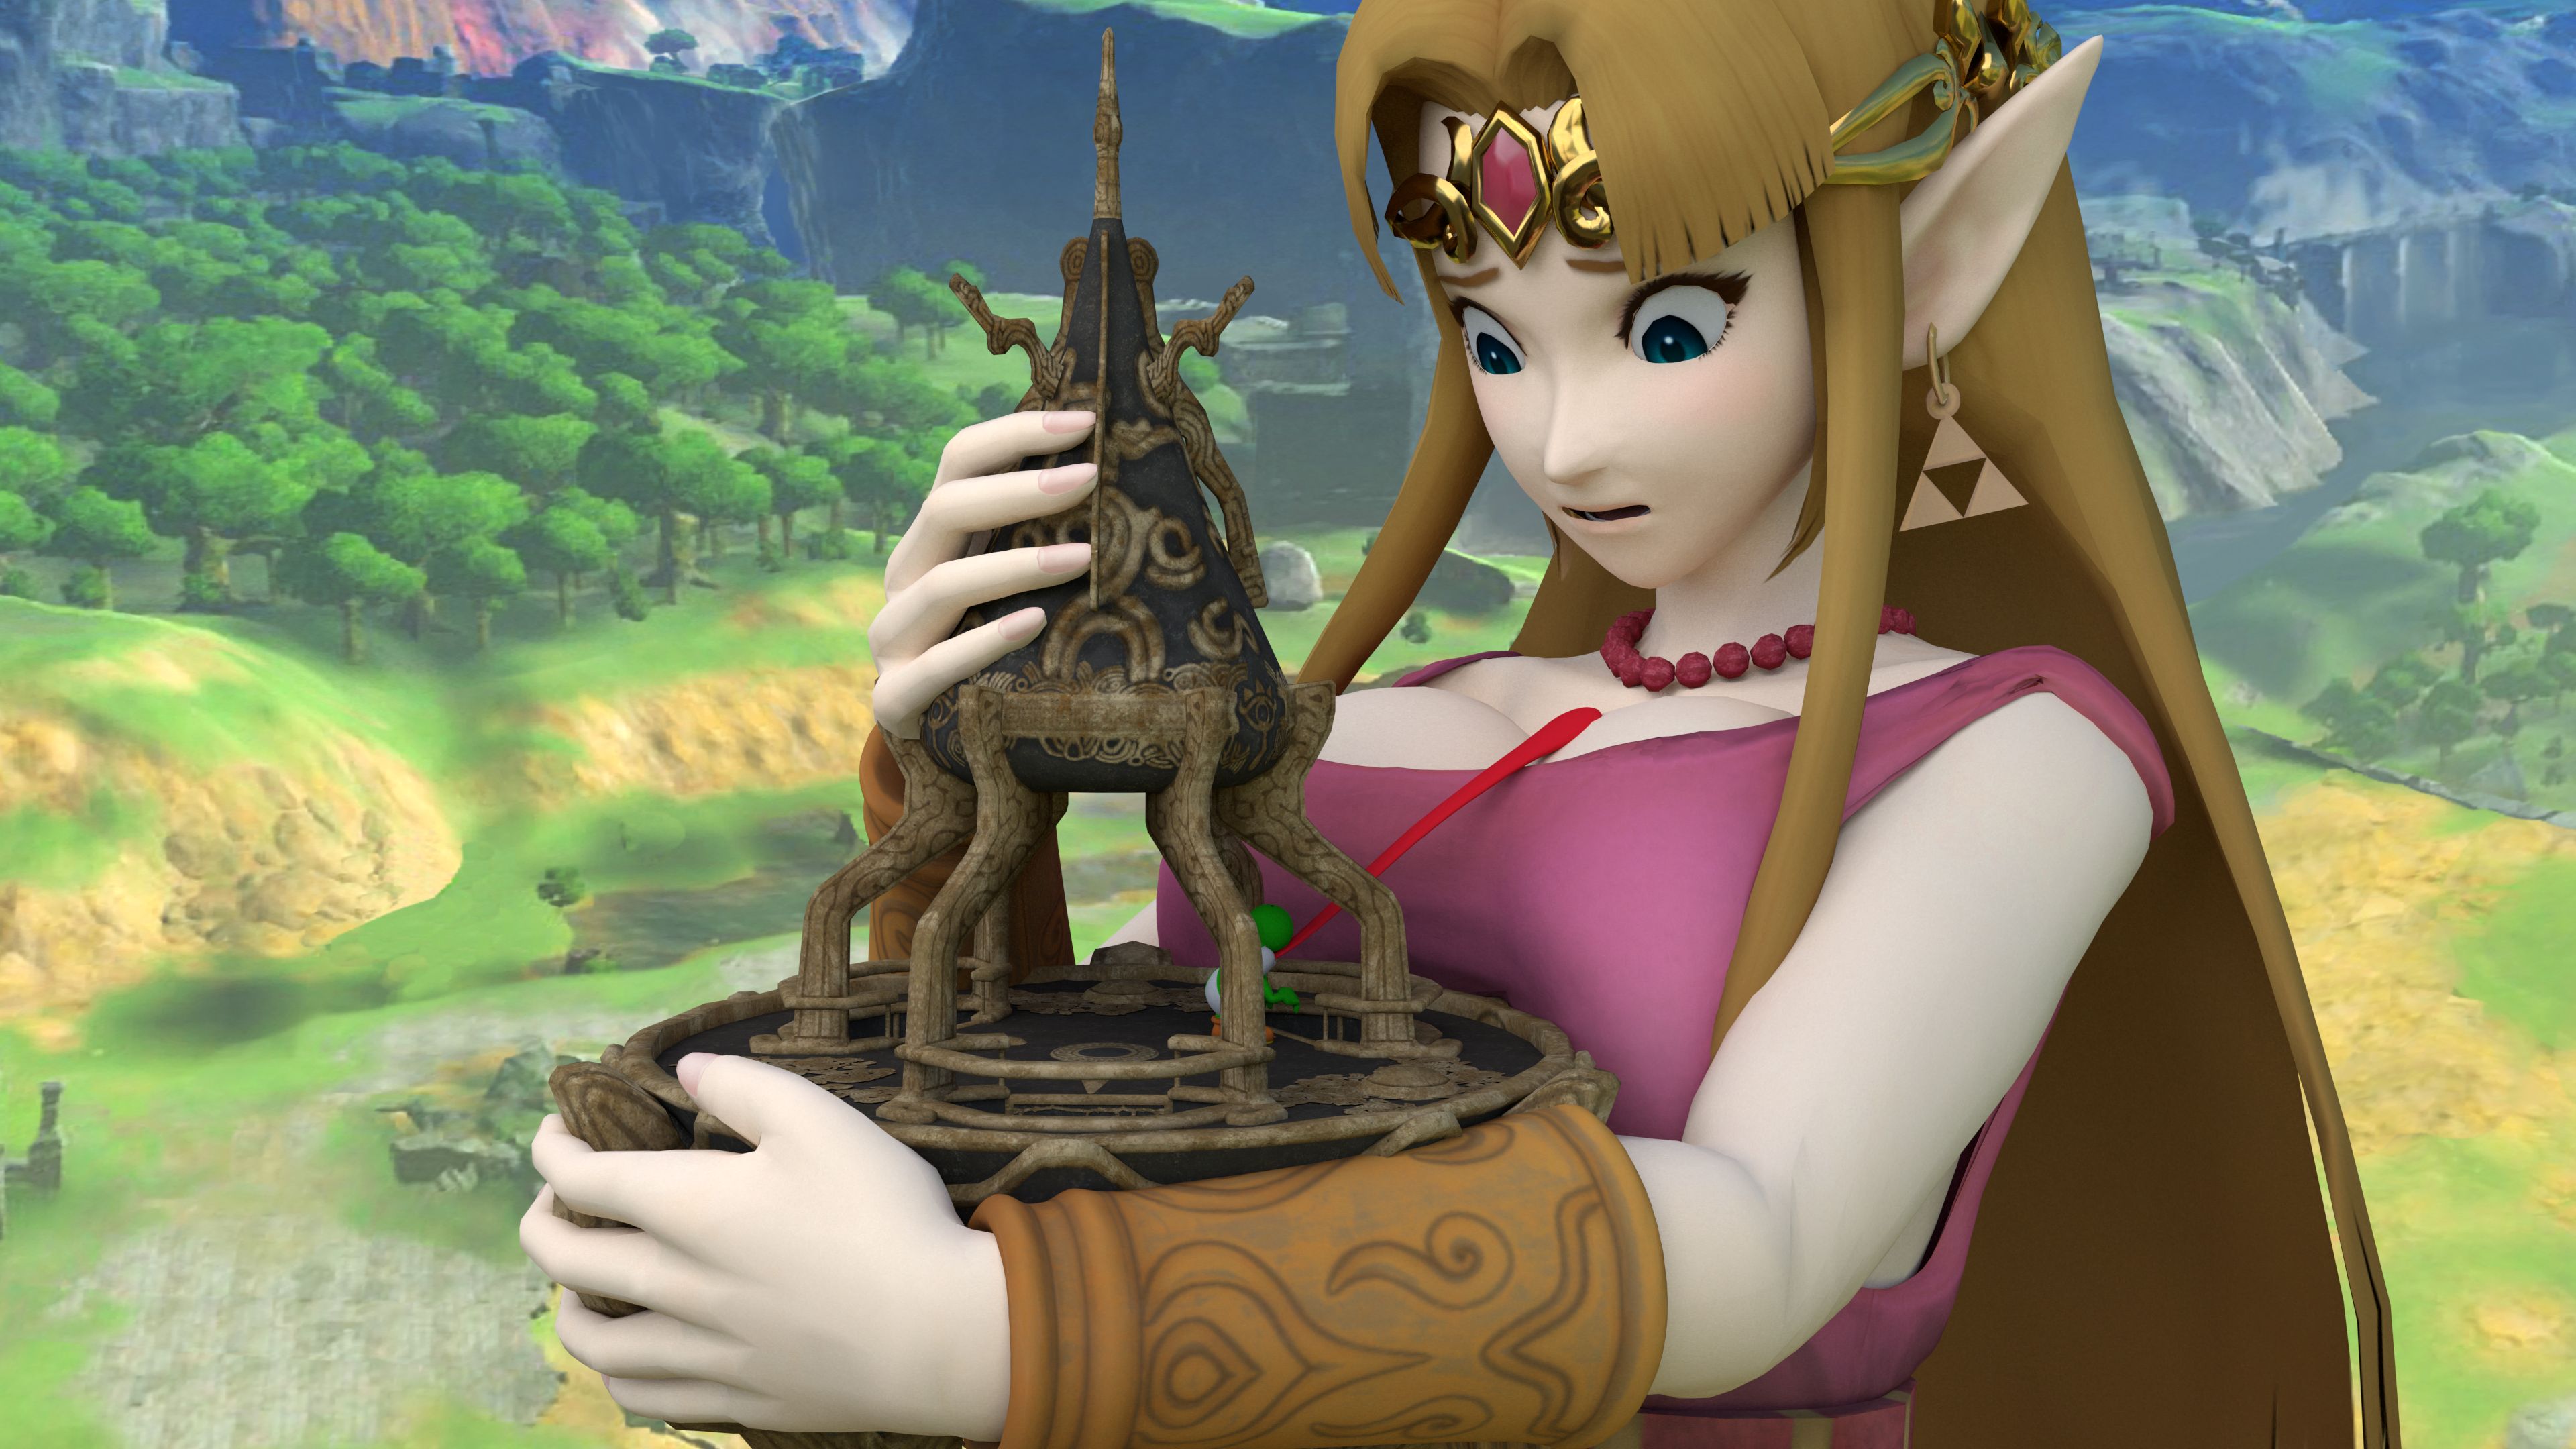 Giantess Zelda vs tower.